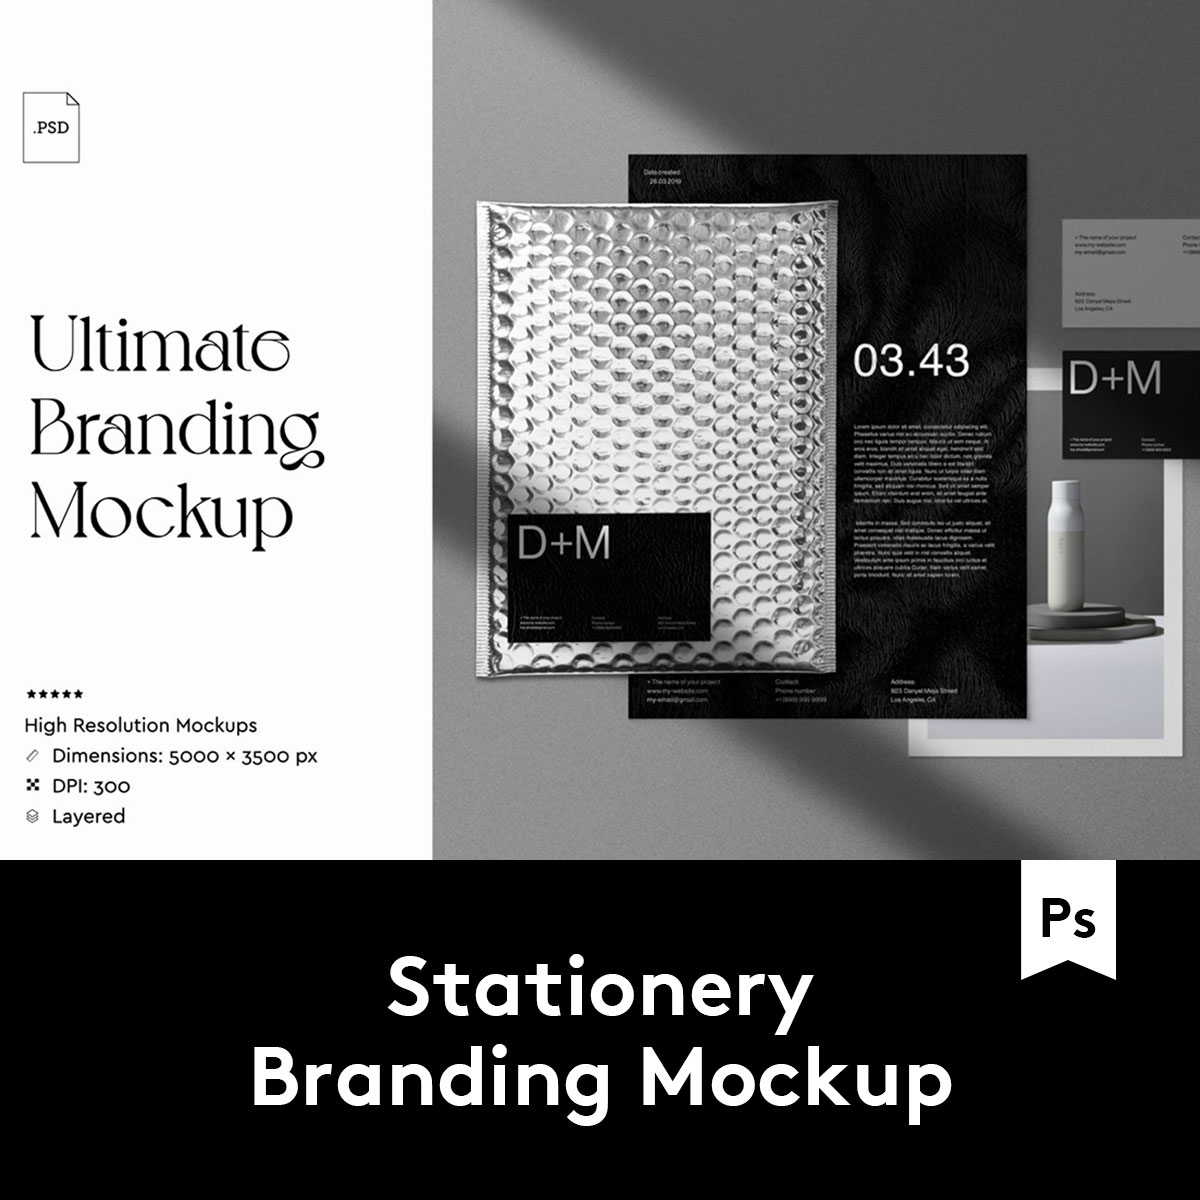 Stationery Brand Mockups黑色品牌办公用品样机模板 2020051402